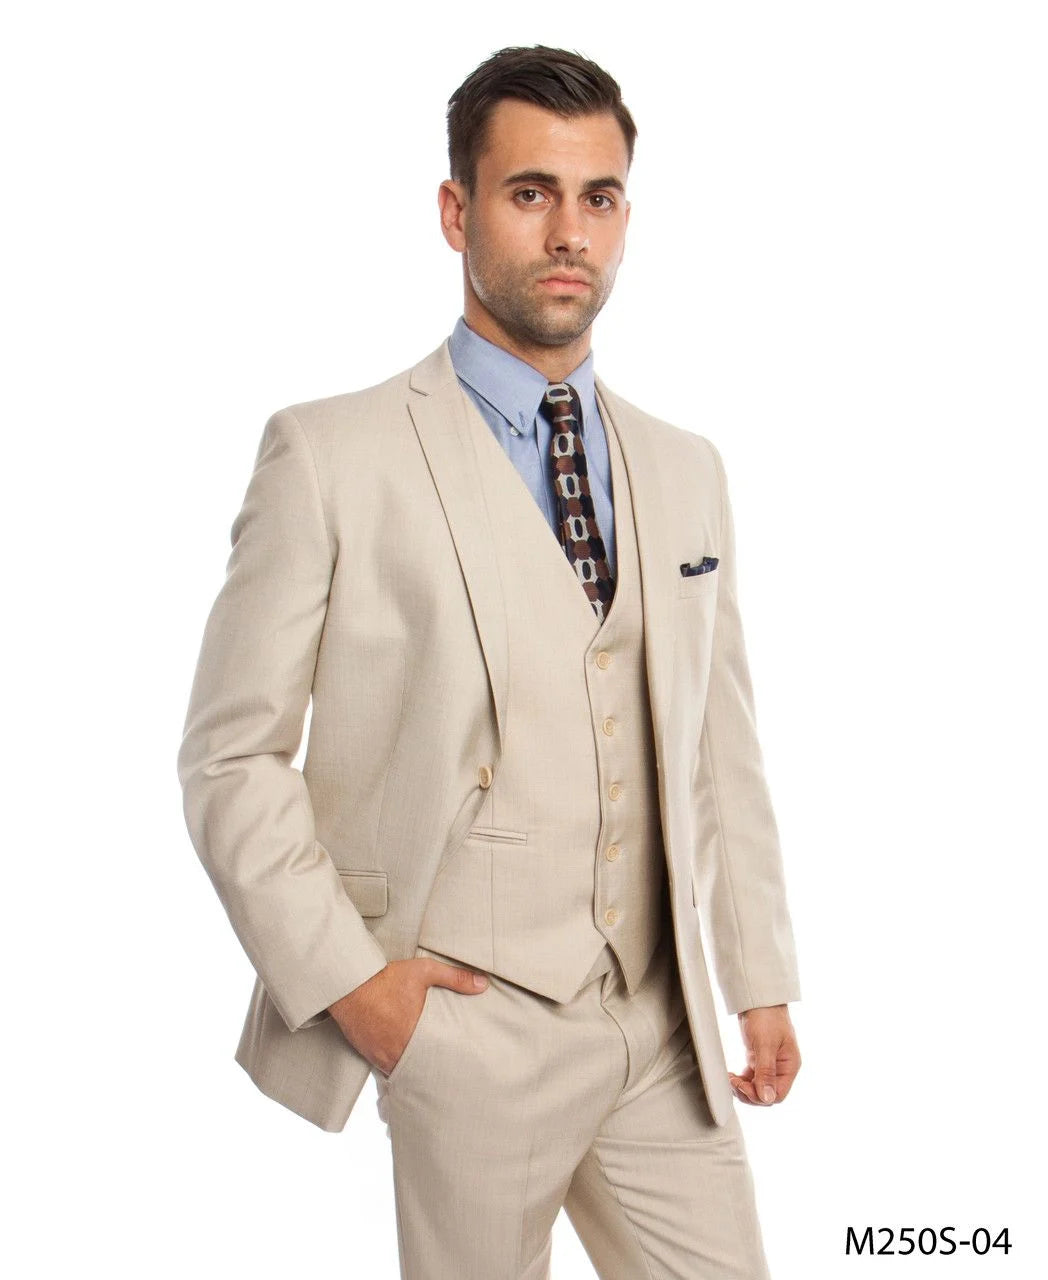 Formal  Tazio Men's 3 Piece Slim Fit Executive Business Suit Classy Formal Look